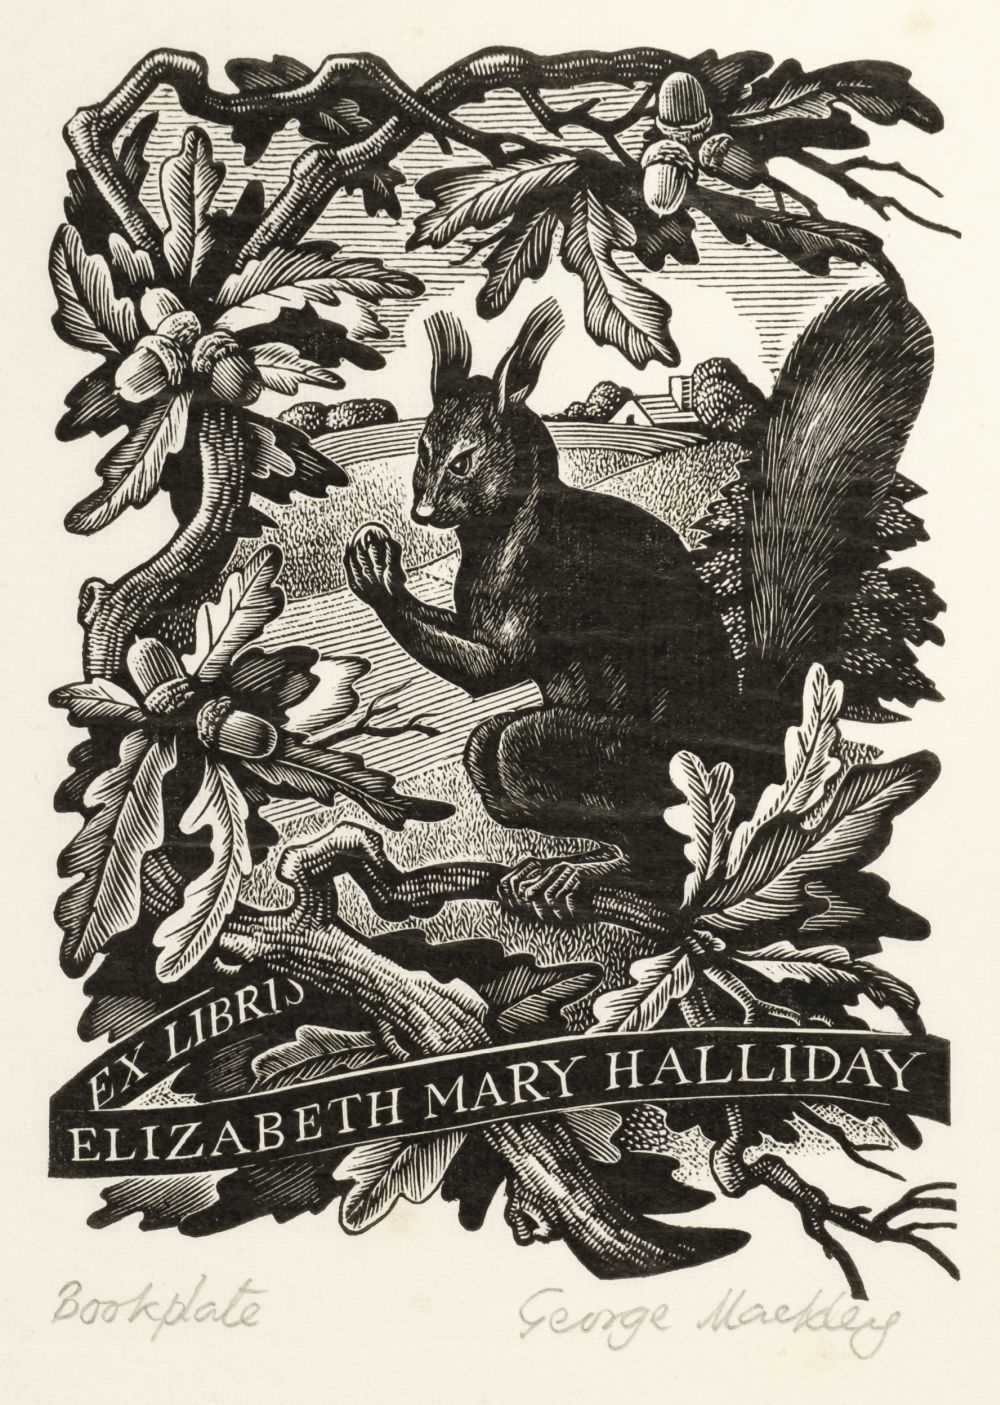 Lot 431 - Mackley (George, 1900-1983). Bookplate for Elizabeth Mary Halliday, 1952